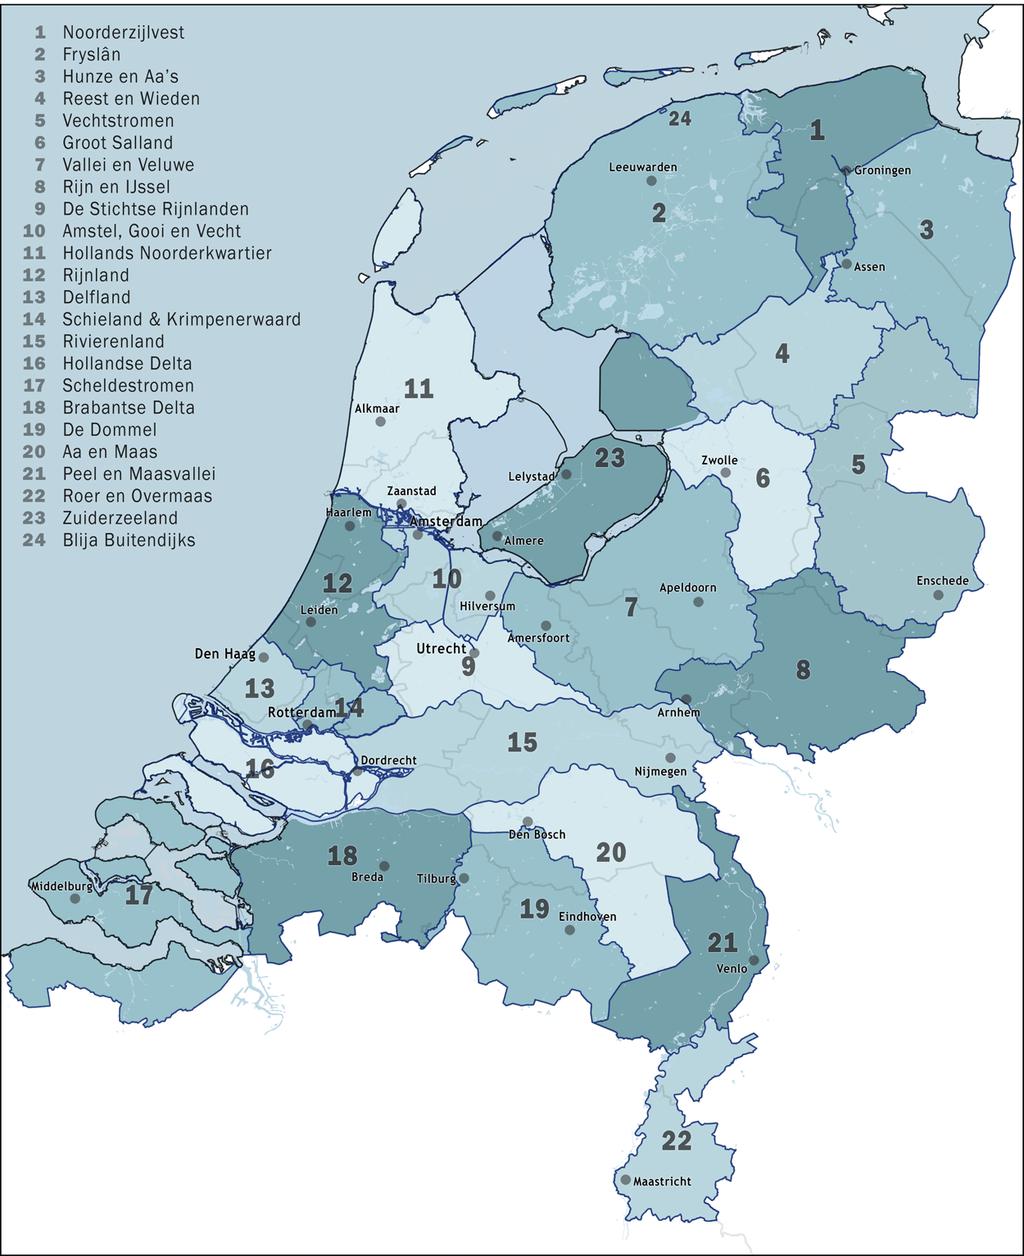 Water Authority Zuiderzeeland Population: 400.